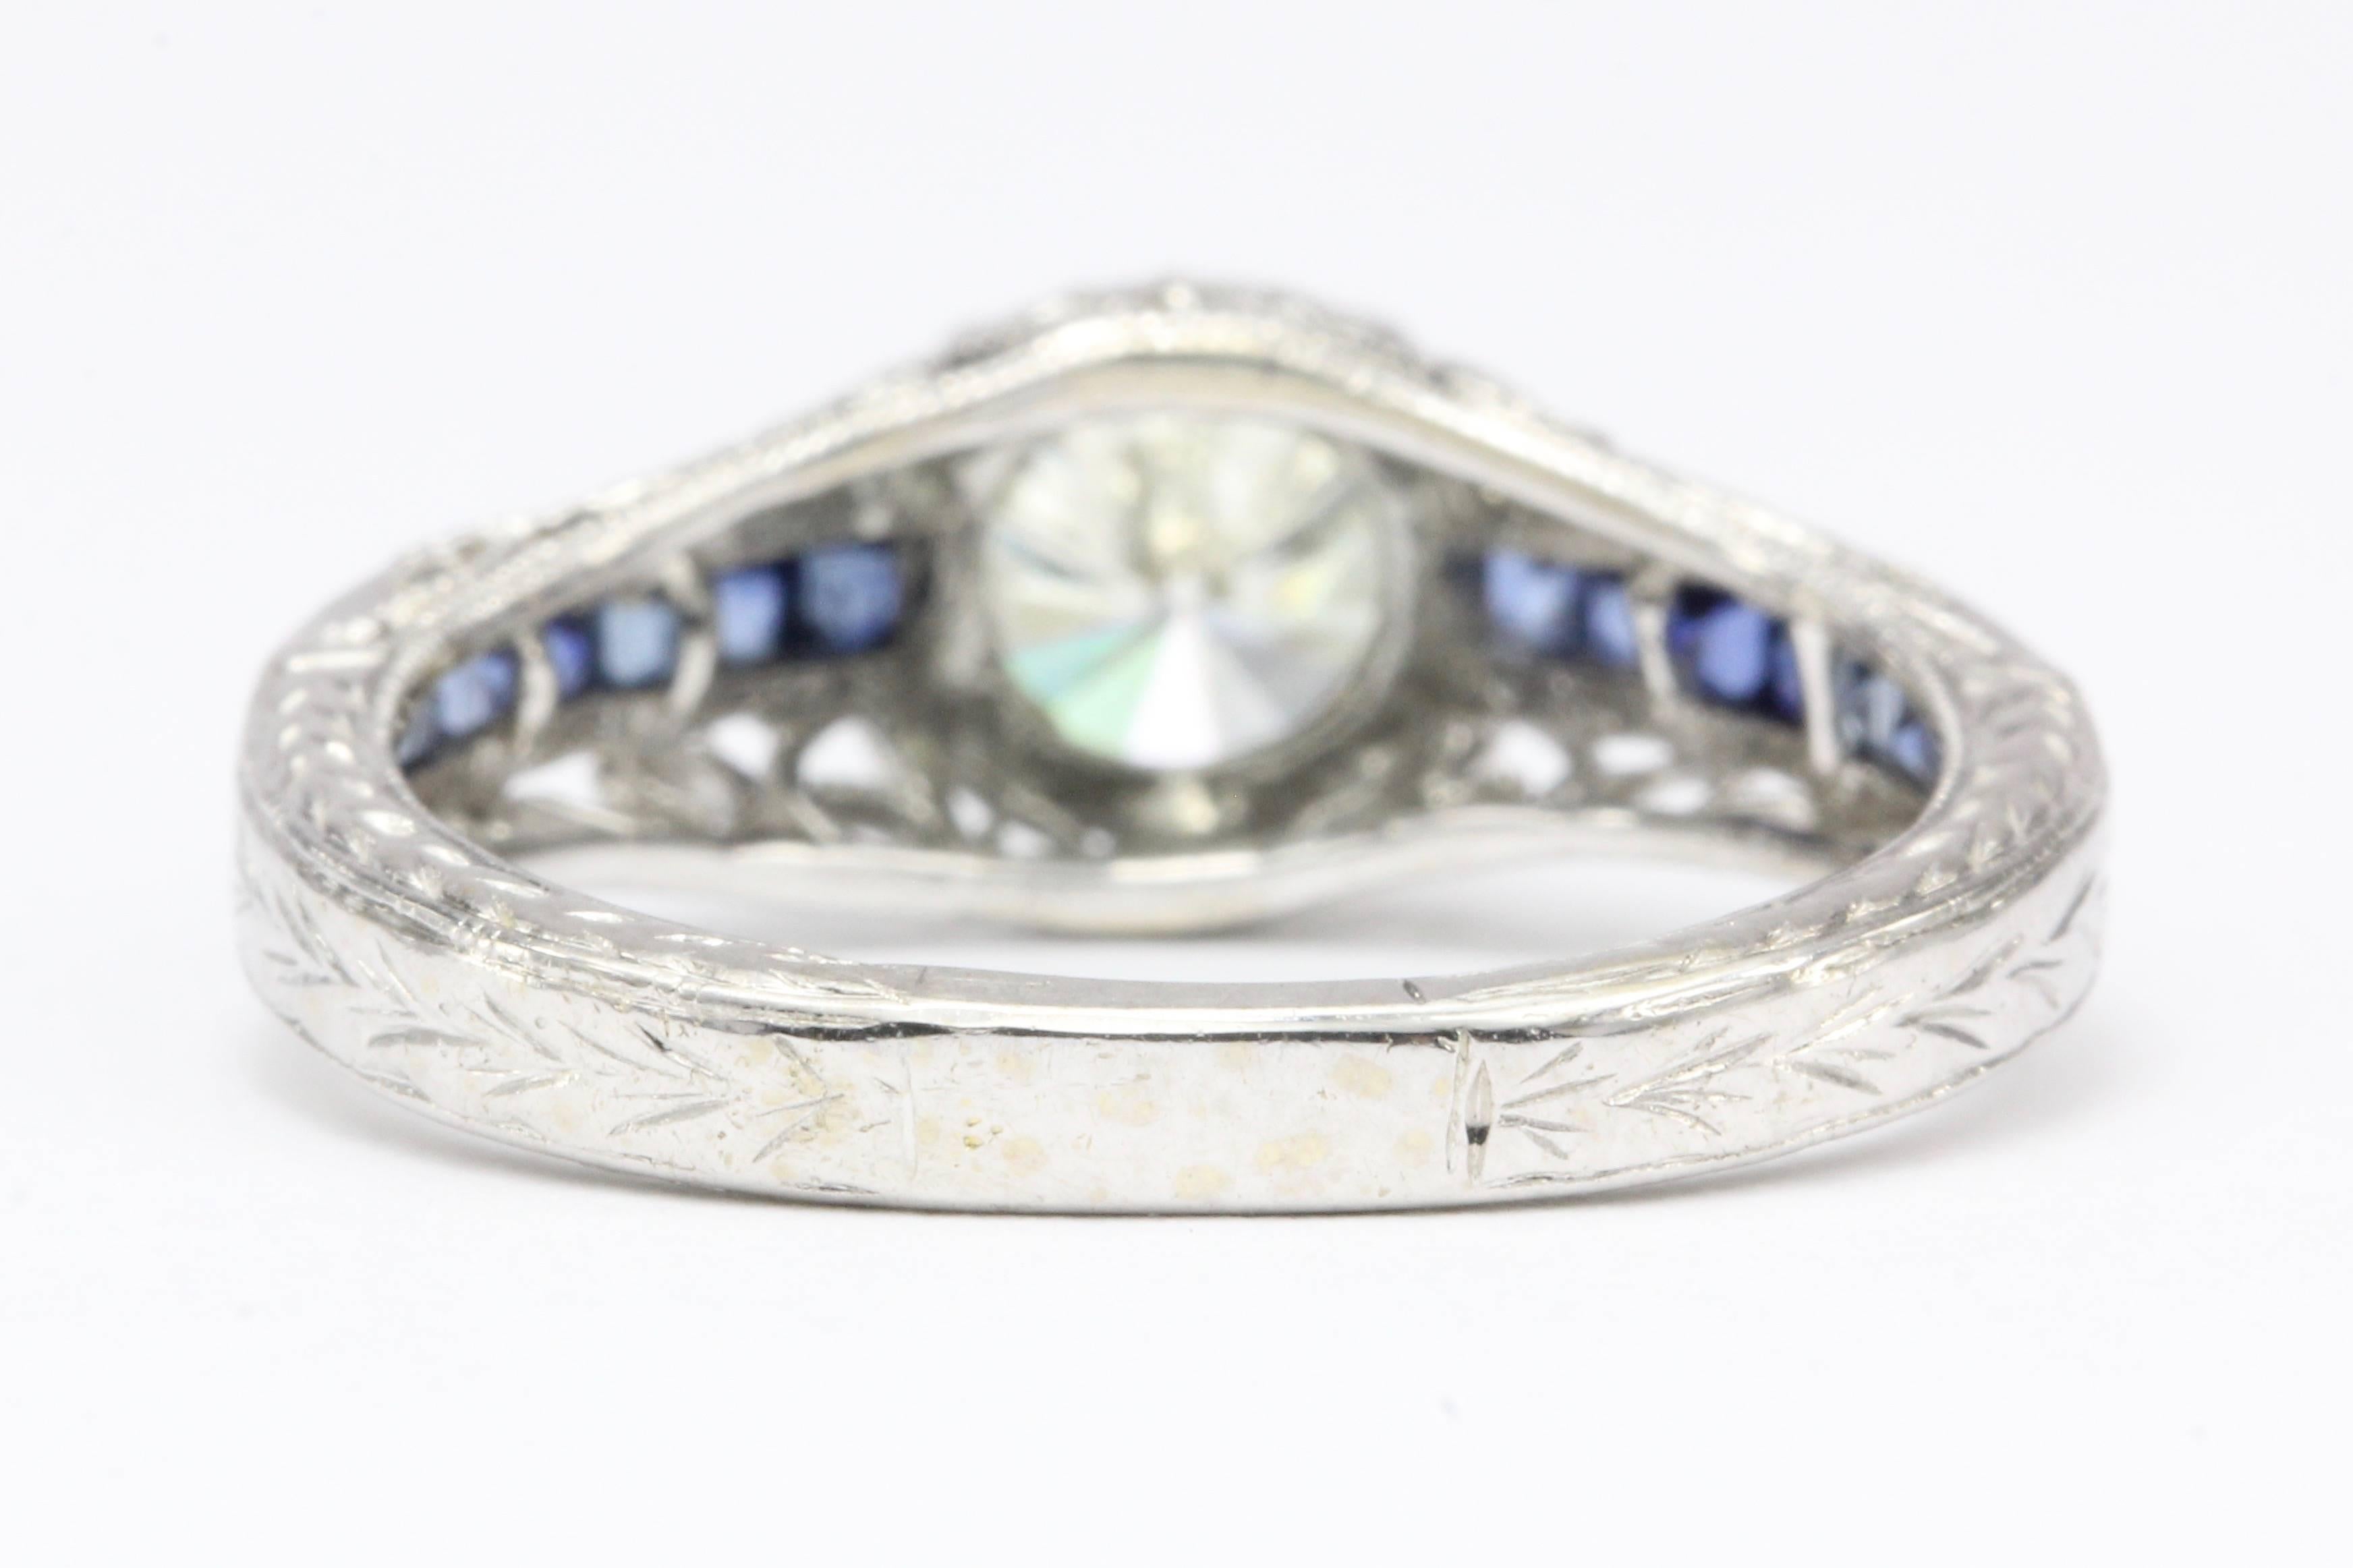 Women's Art Deco Style White Gold 1 Carat Diamond and Sapphire Ring